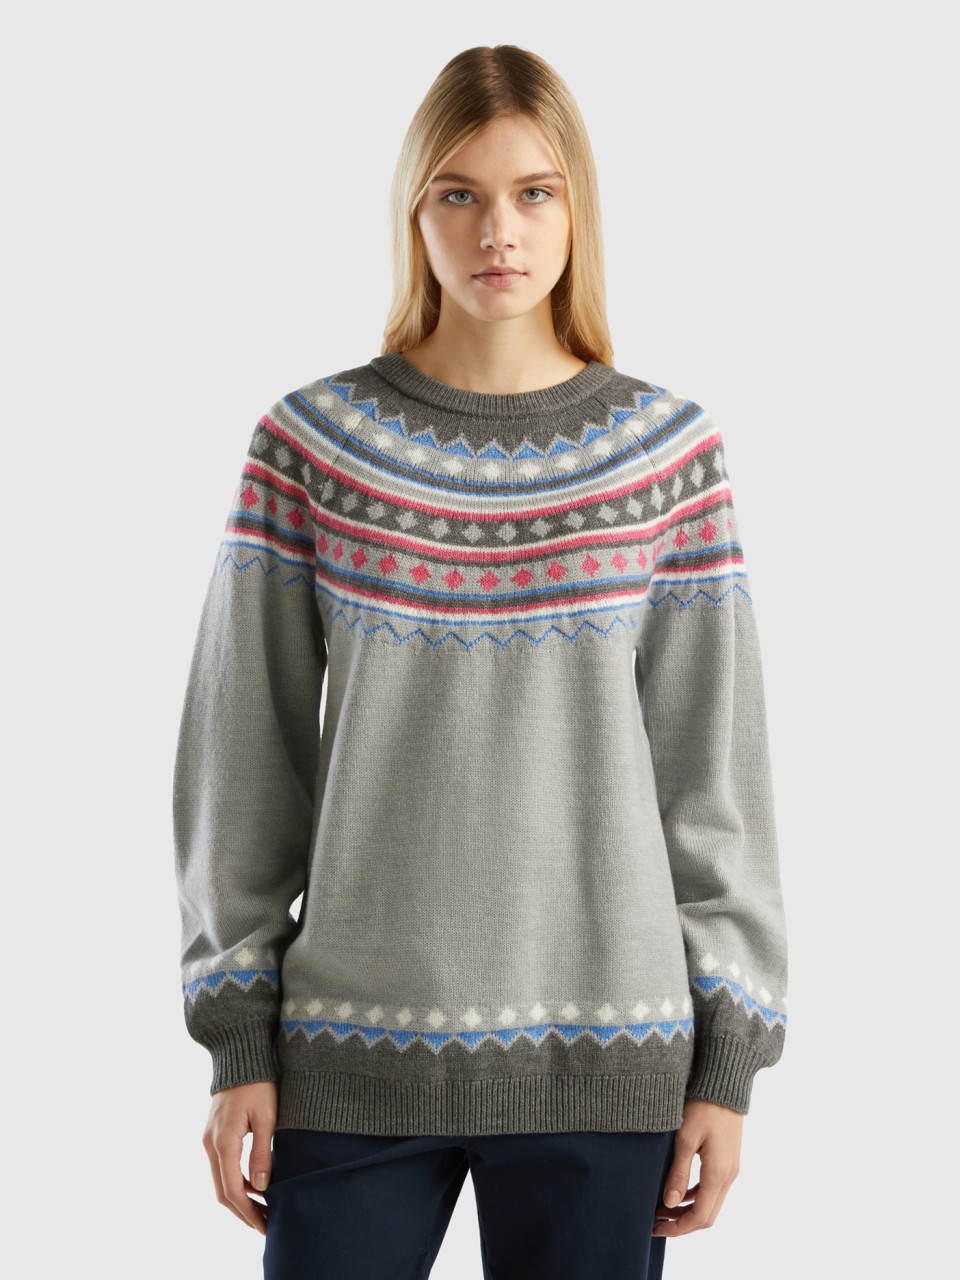 Benetton, Jacquard Sweater With Lurex, Dark Gray, Women